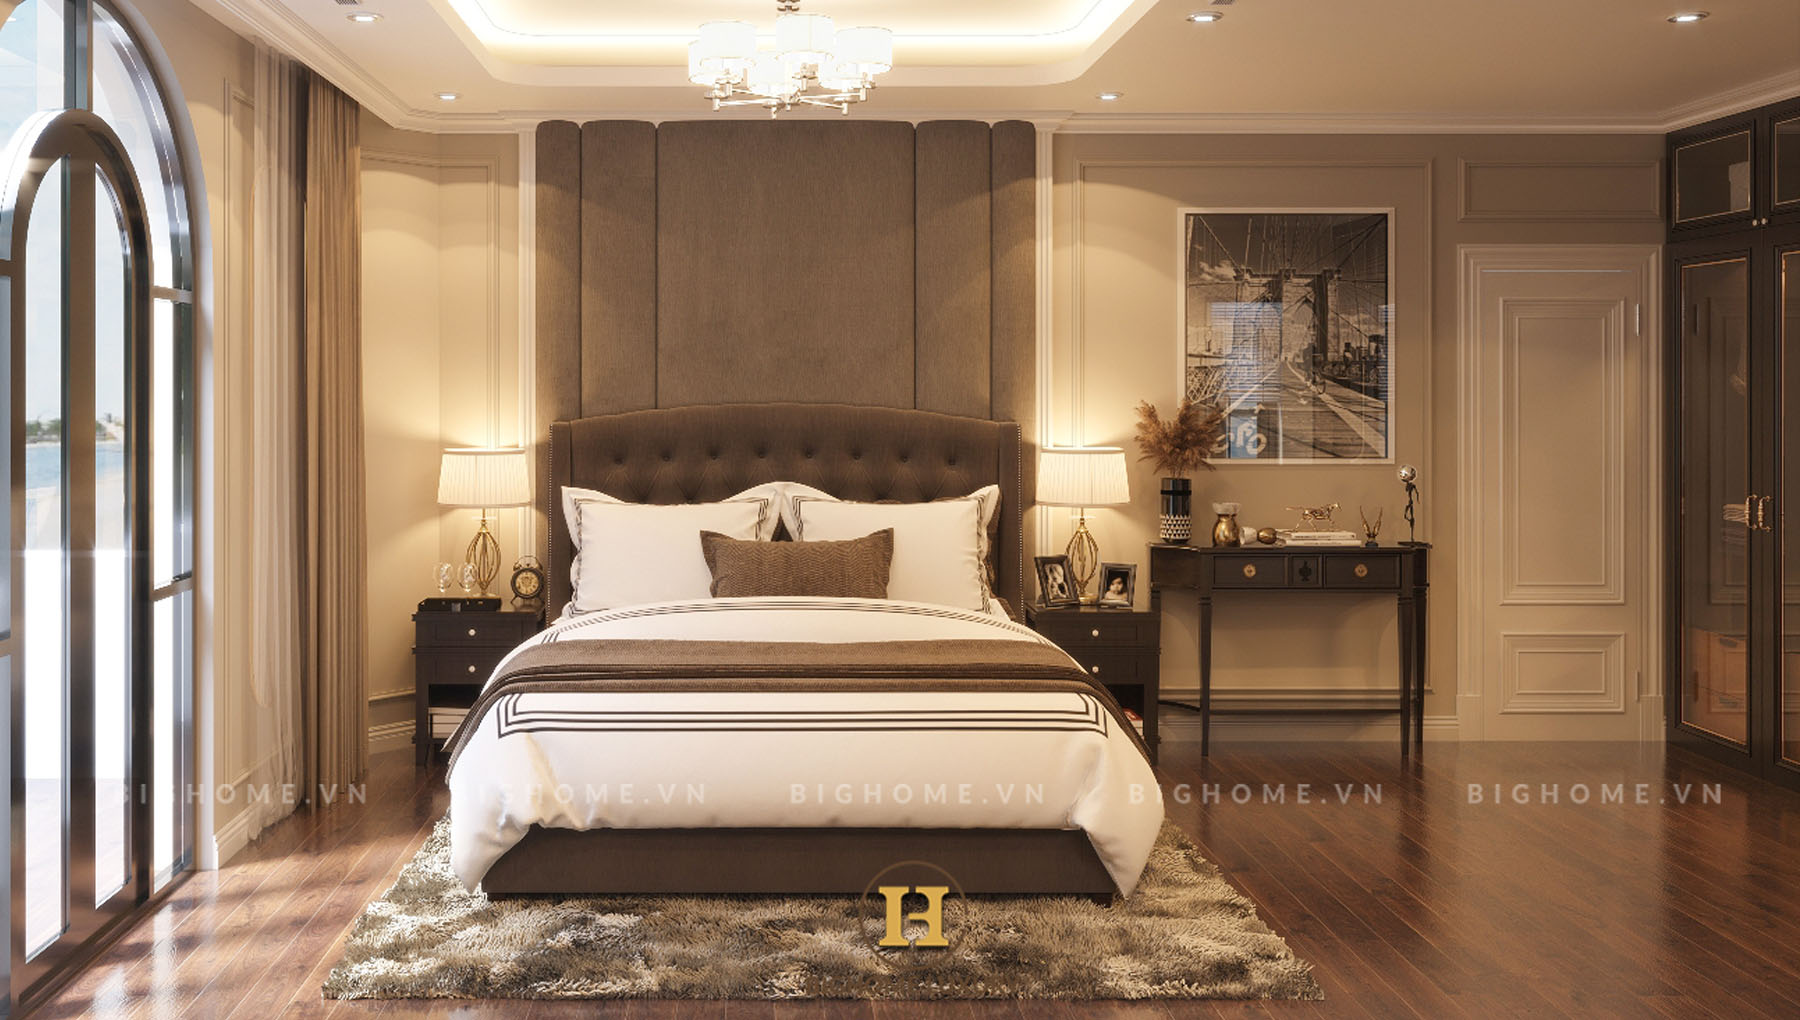 louis hoang mai 3Chi tiết nội thất phòng ngủ master luxury tại Louis Hoang Mai